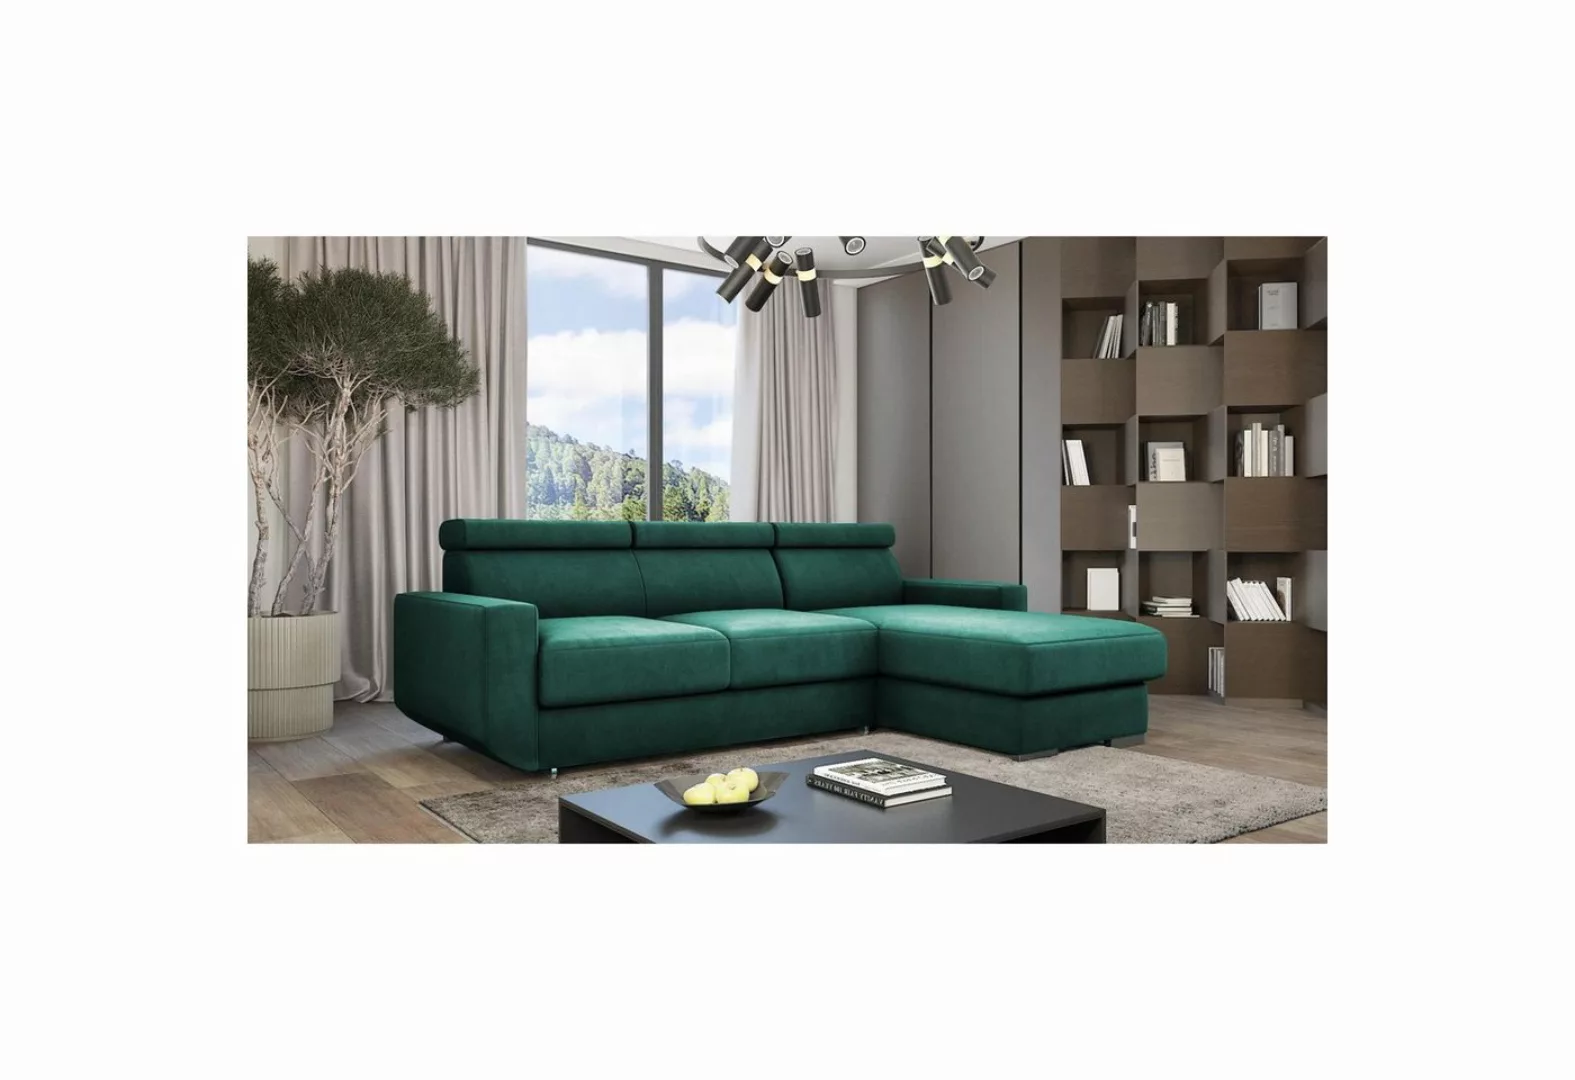 Beautysofa Ecksofa Bonny, universelle L-Form Sofa mit Wellenunterfederung, günstig online kaufen